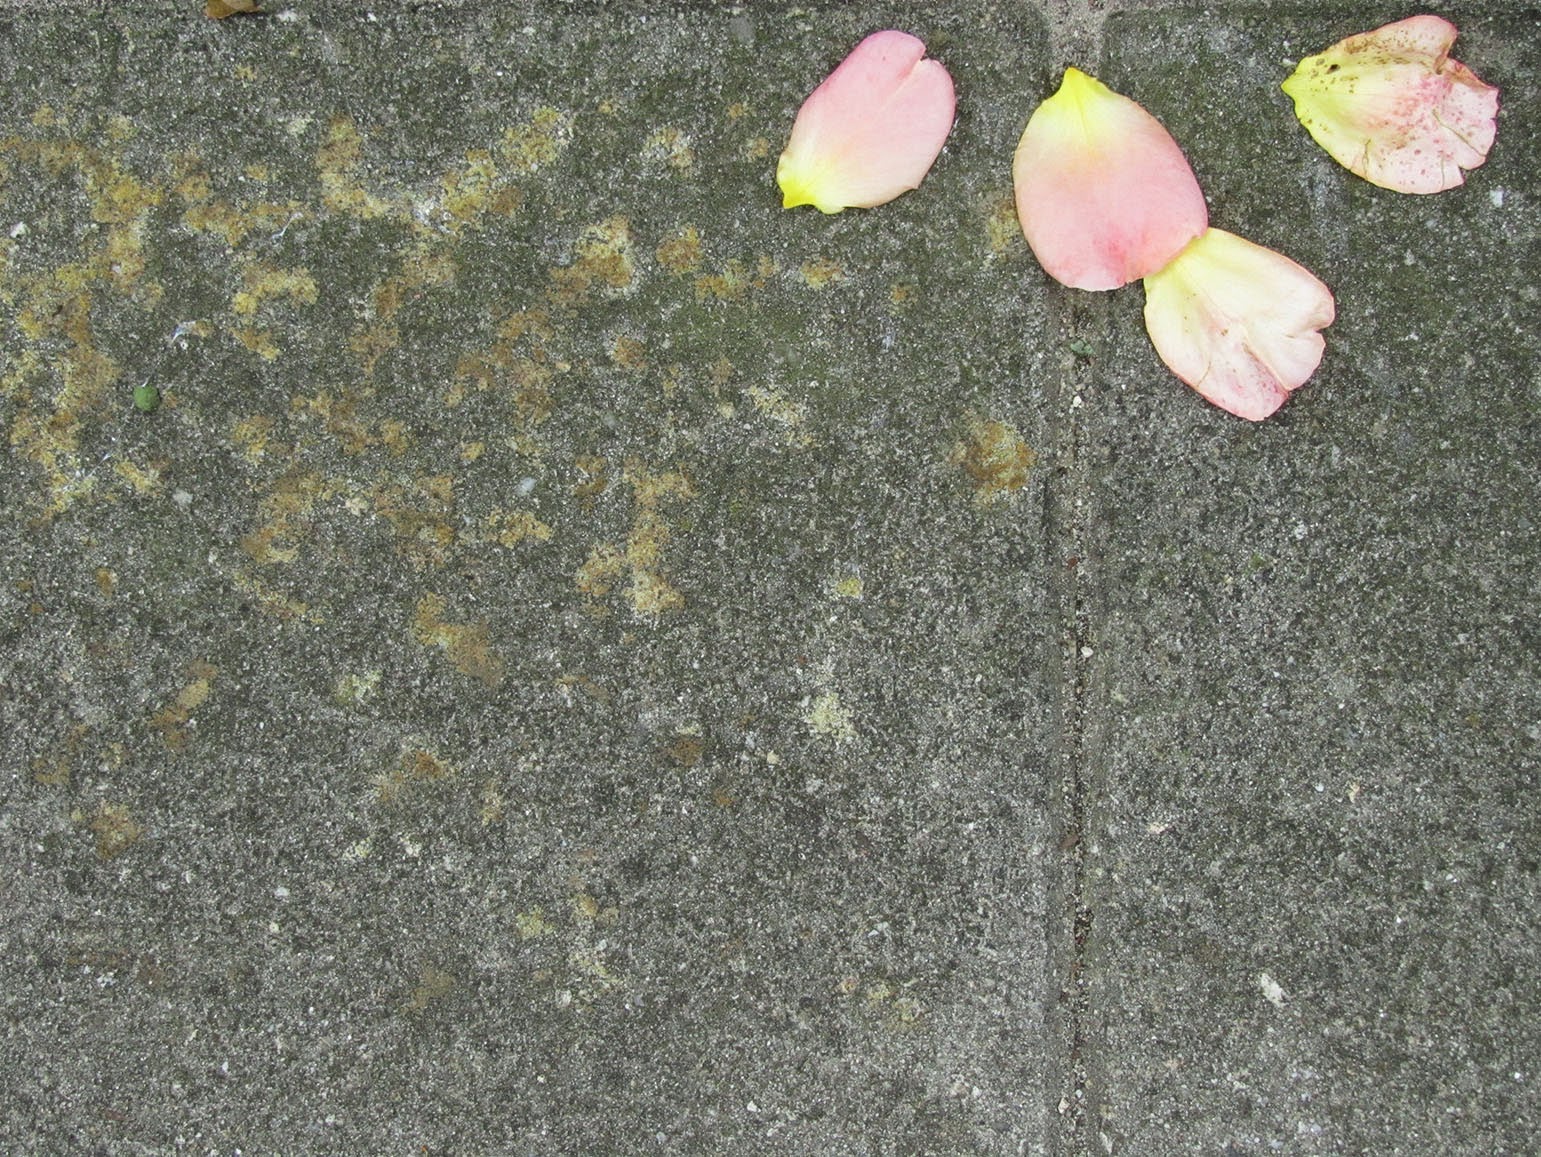 rose petals on the garden path